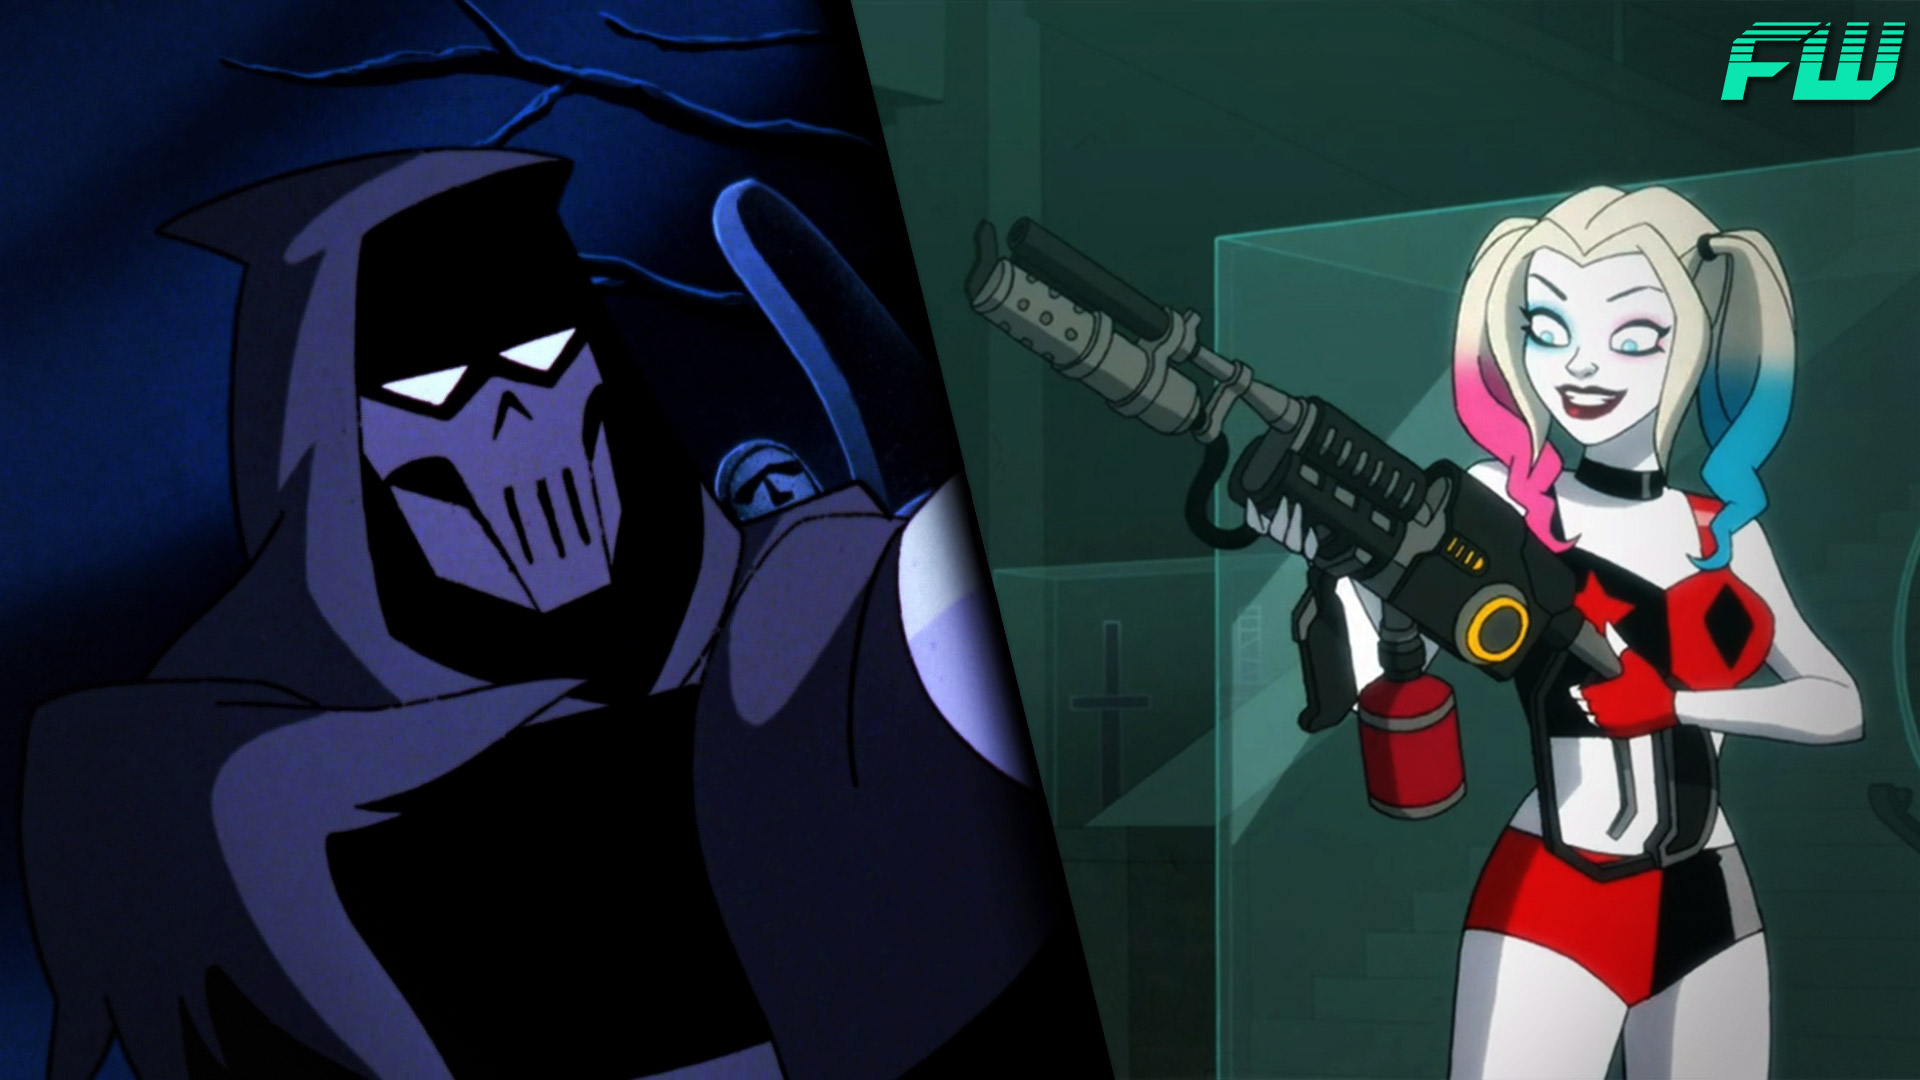 batman the animated series villains